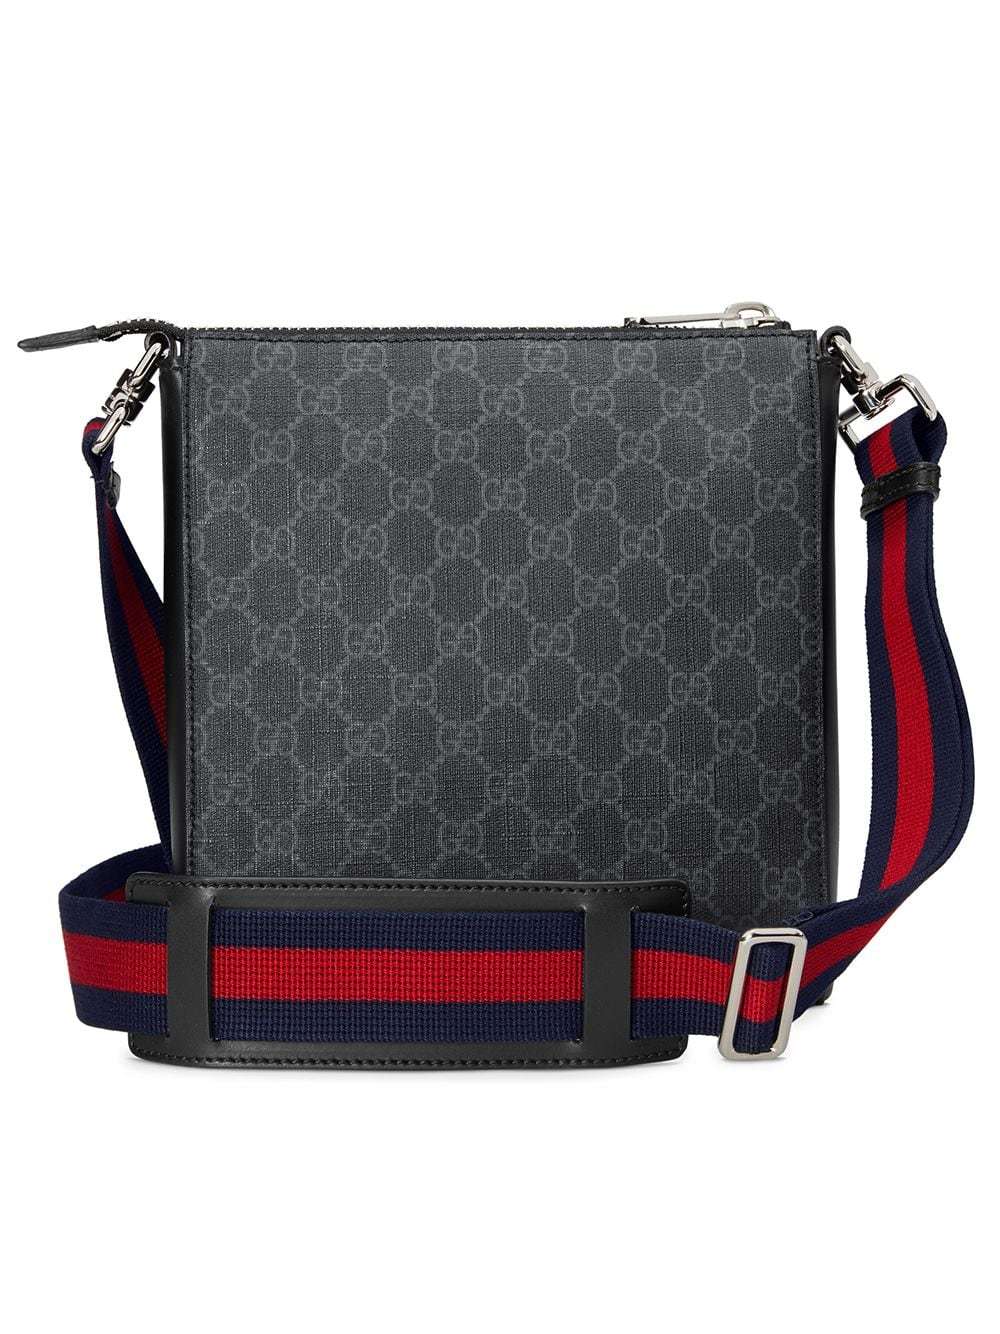 Gucci Gg Supreme Small Messenger Bag, $1,100 | farfetch.com 